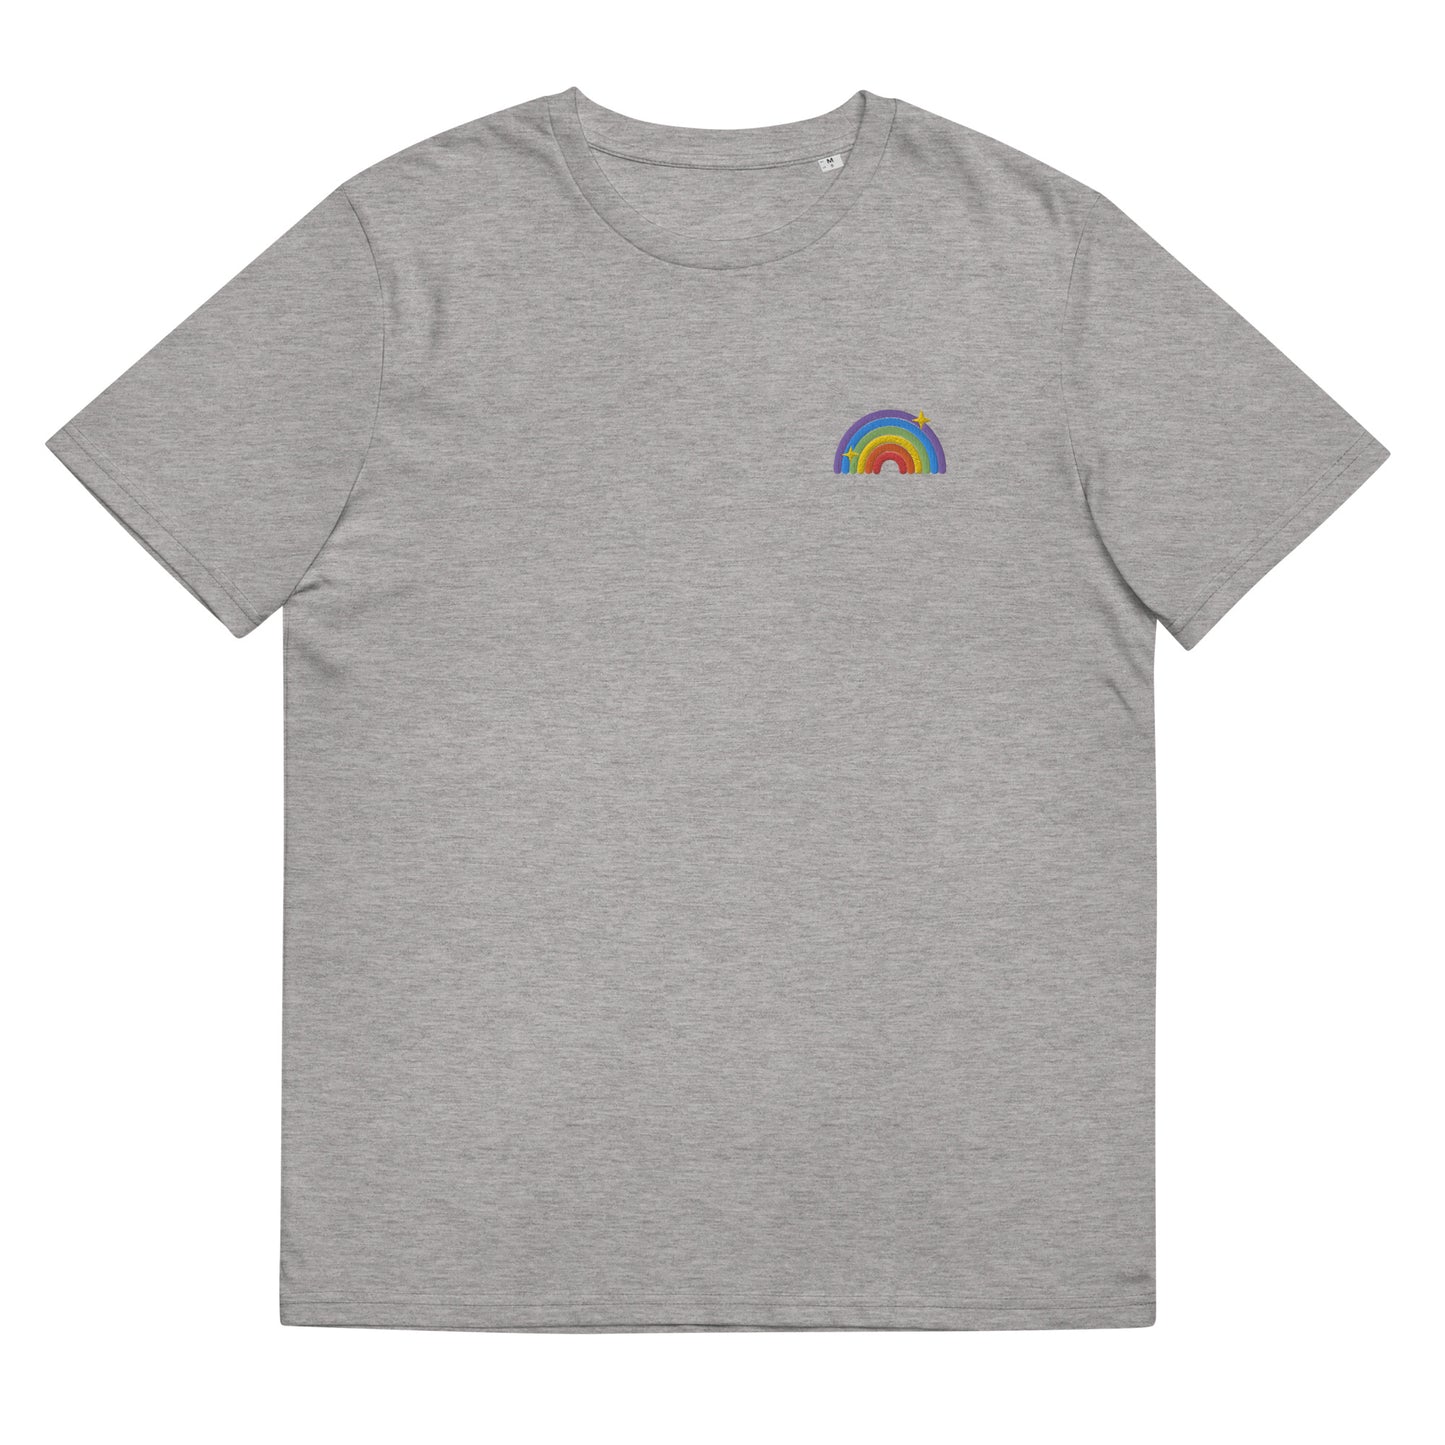 T-shirt en coton biologique : broderie queer arc-en-ciel